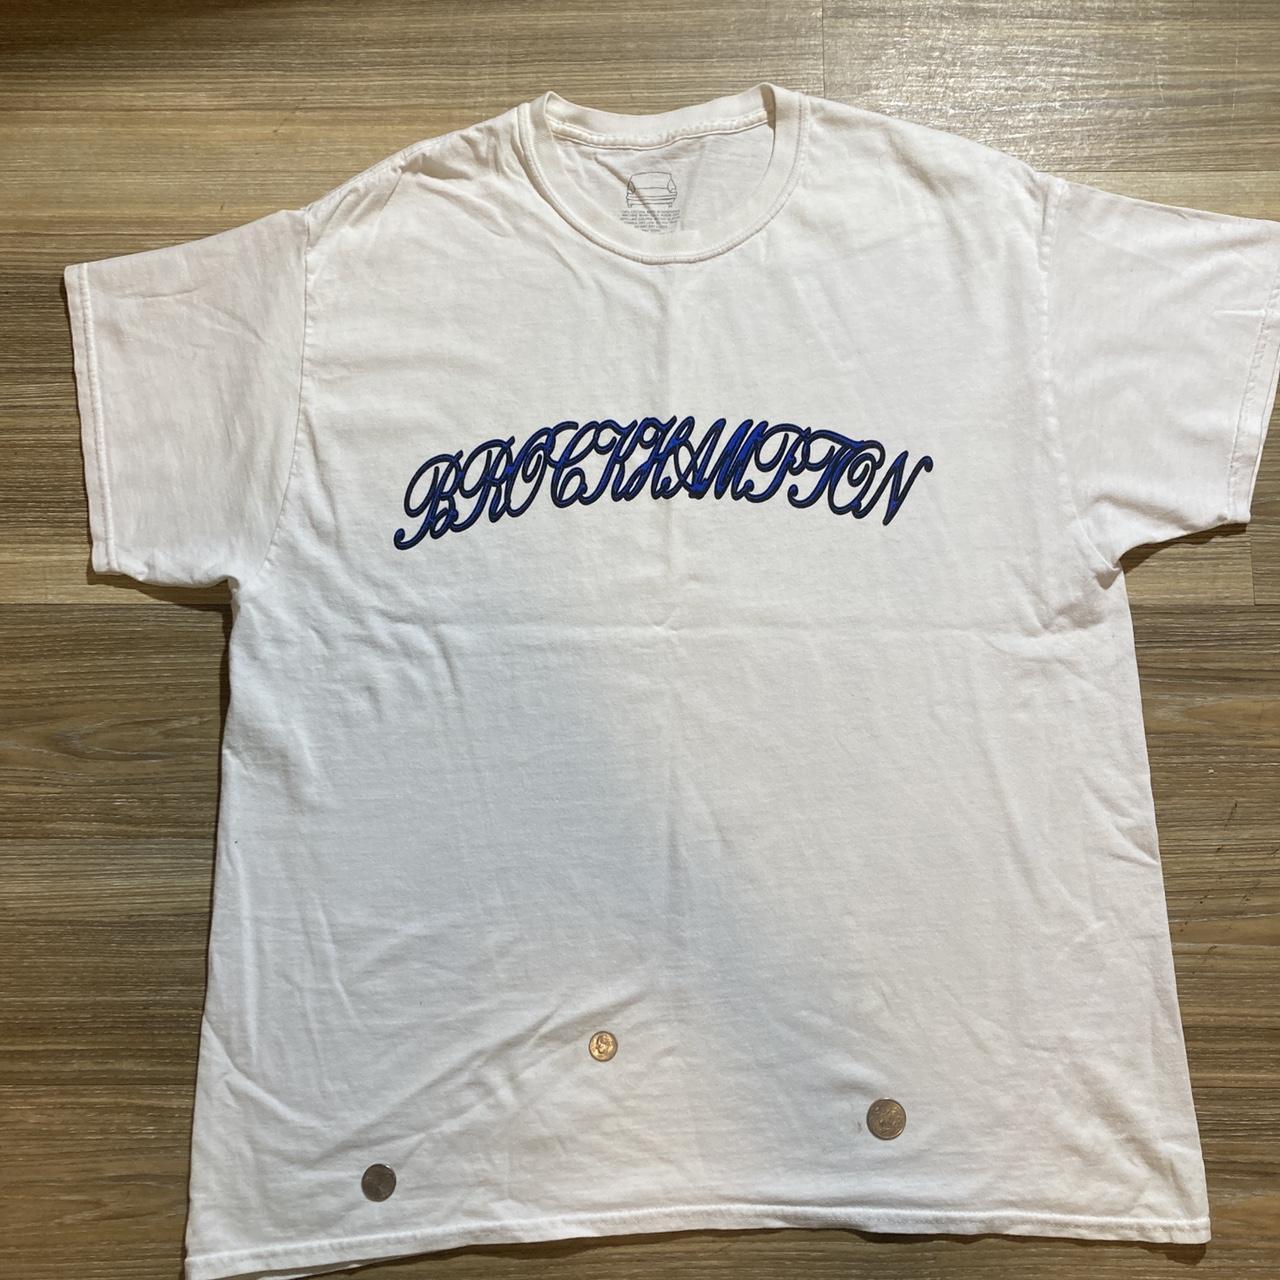 Brockhampton Men's White and Blue T-shirt